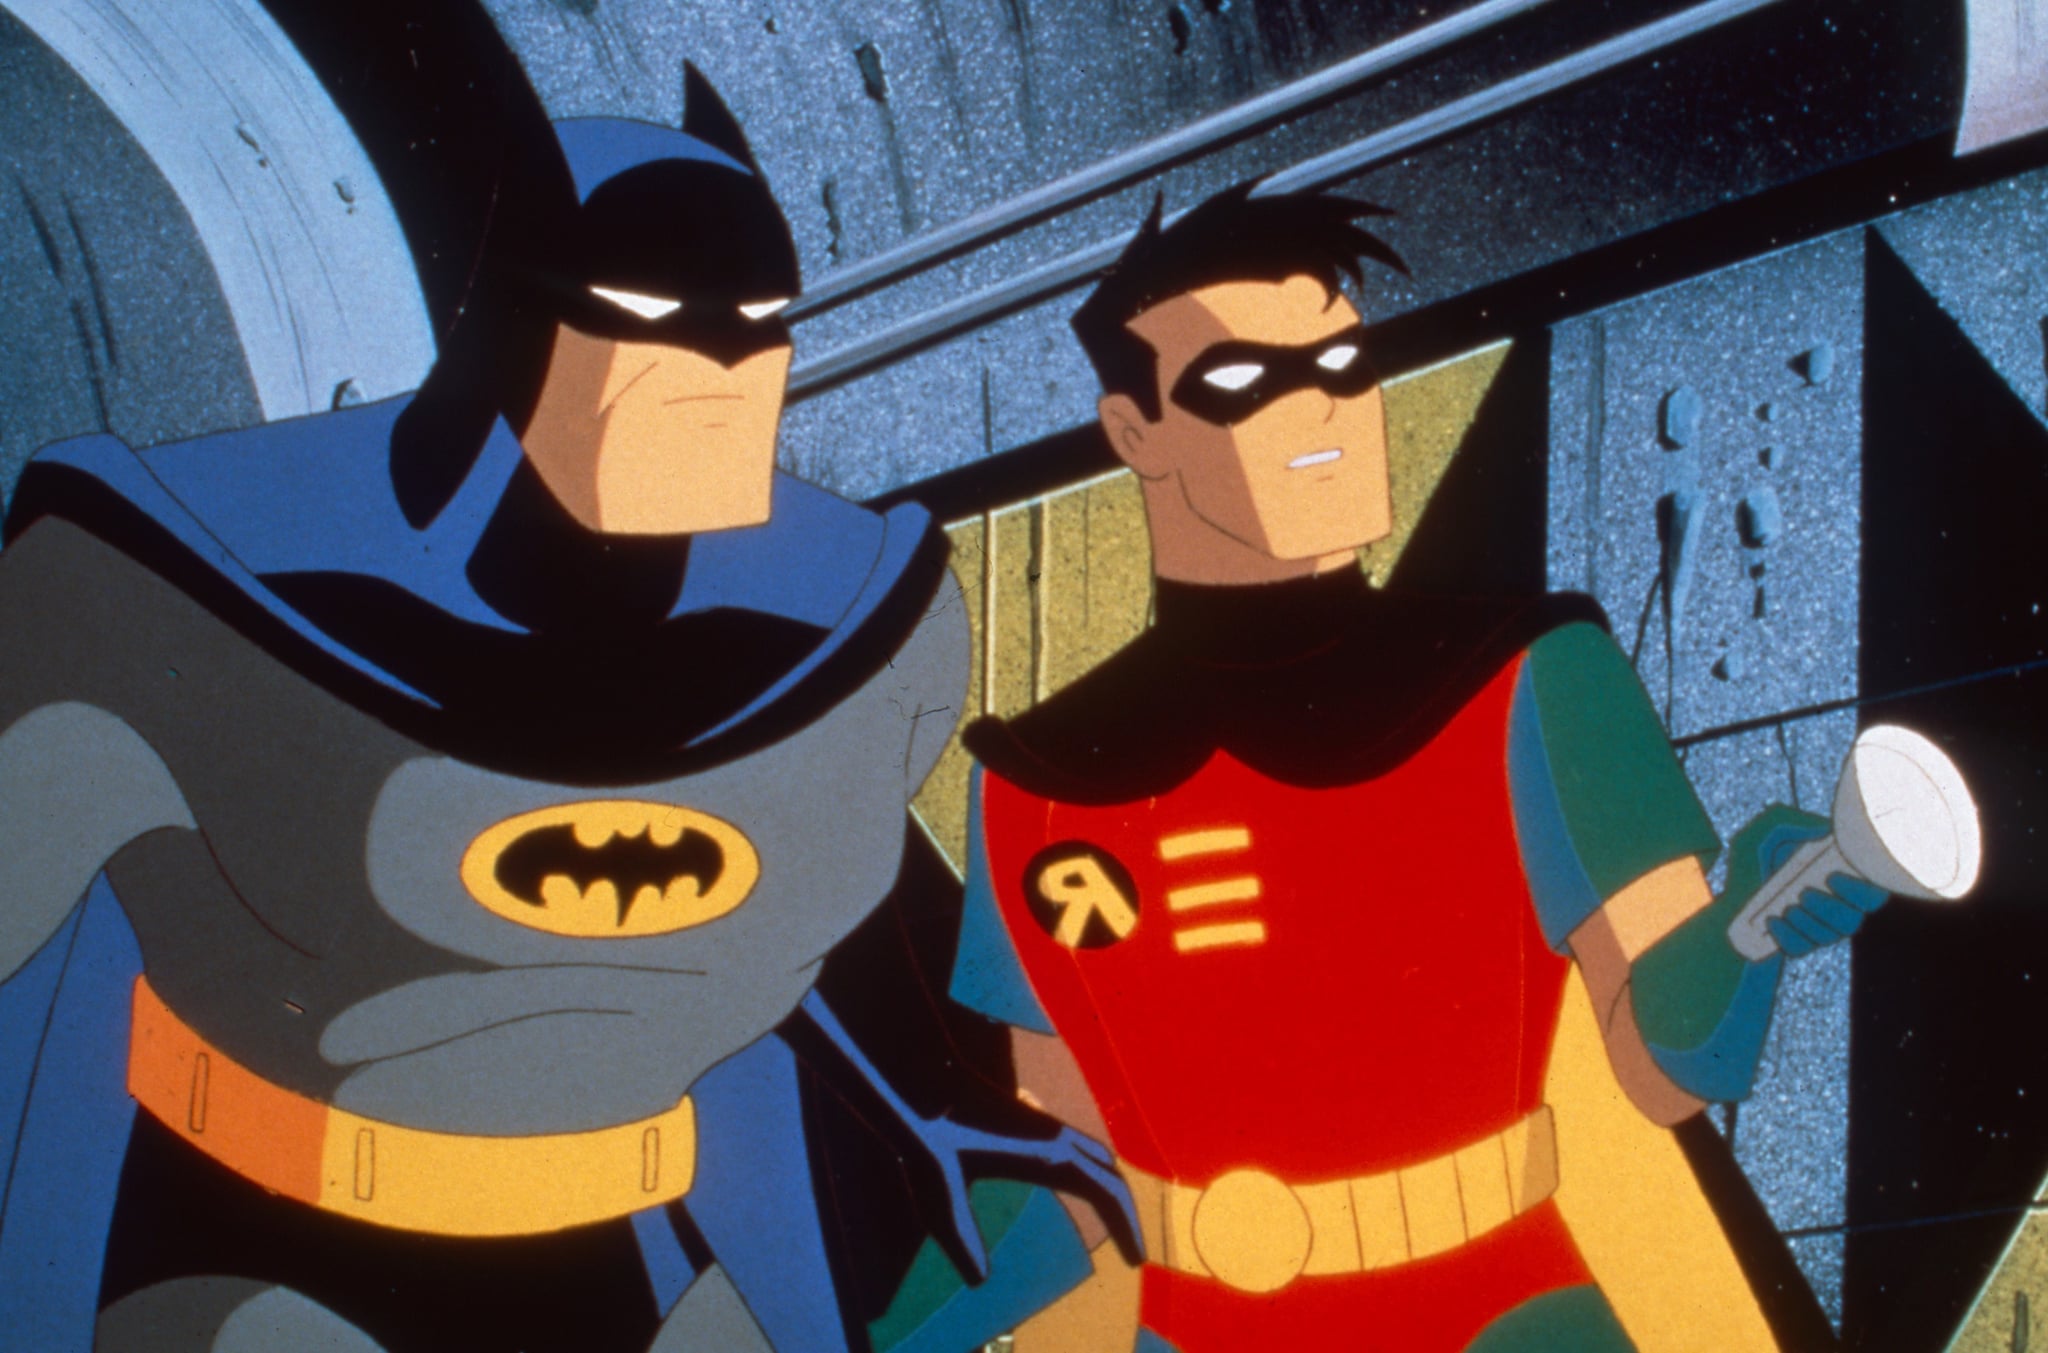 Timm, Bruce & Radomski, Eric. Batman: The Animated Series. Fox Kids. 1992-1995.